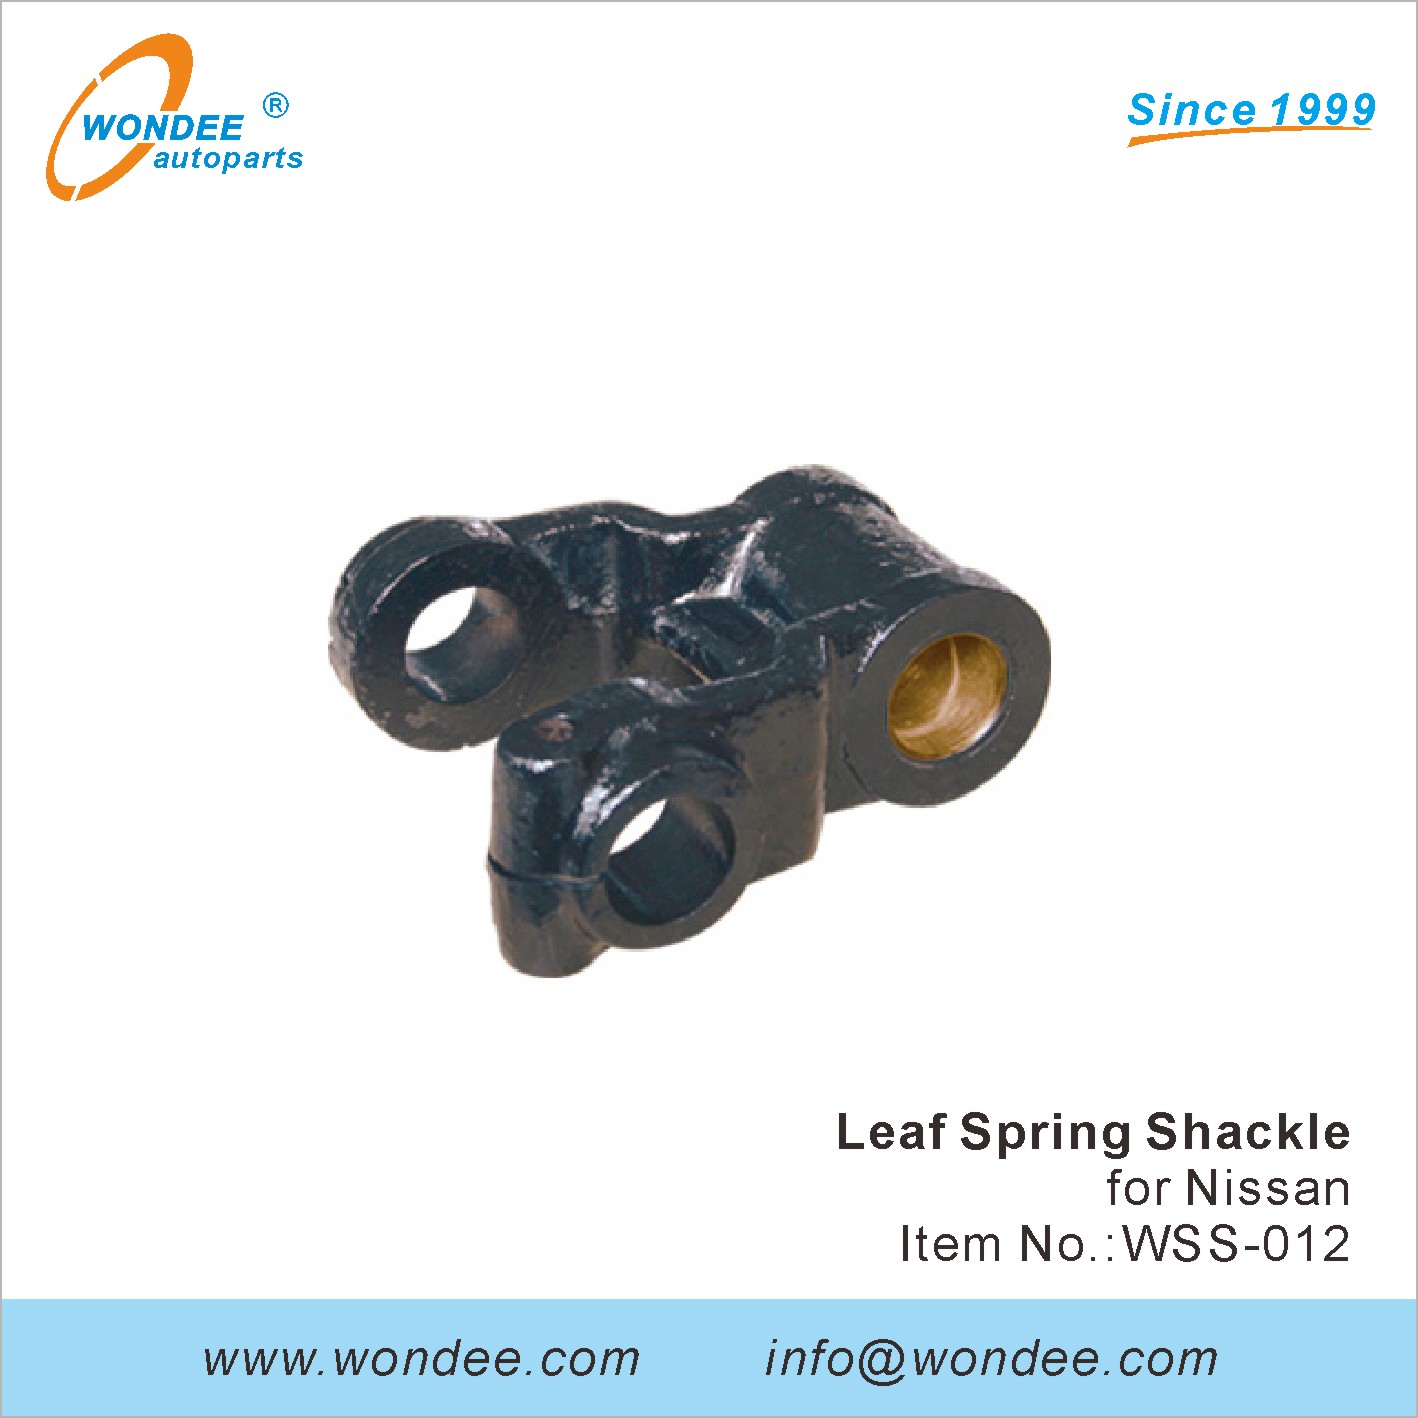 WONDEE leaf spring shackle (12)